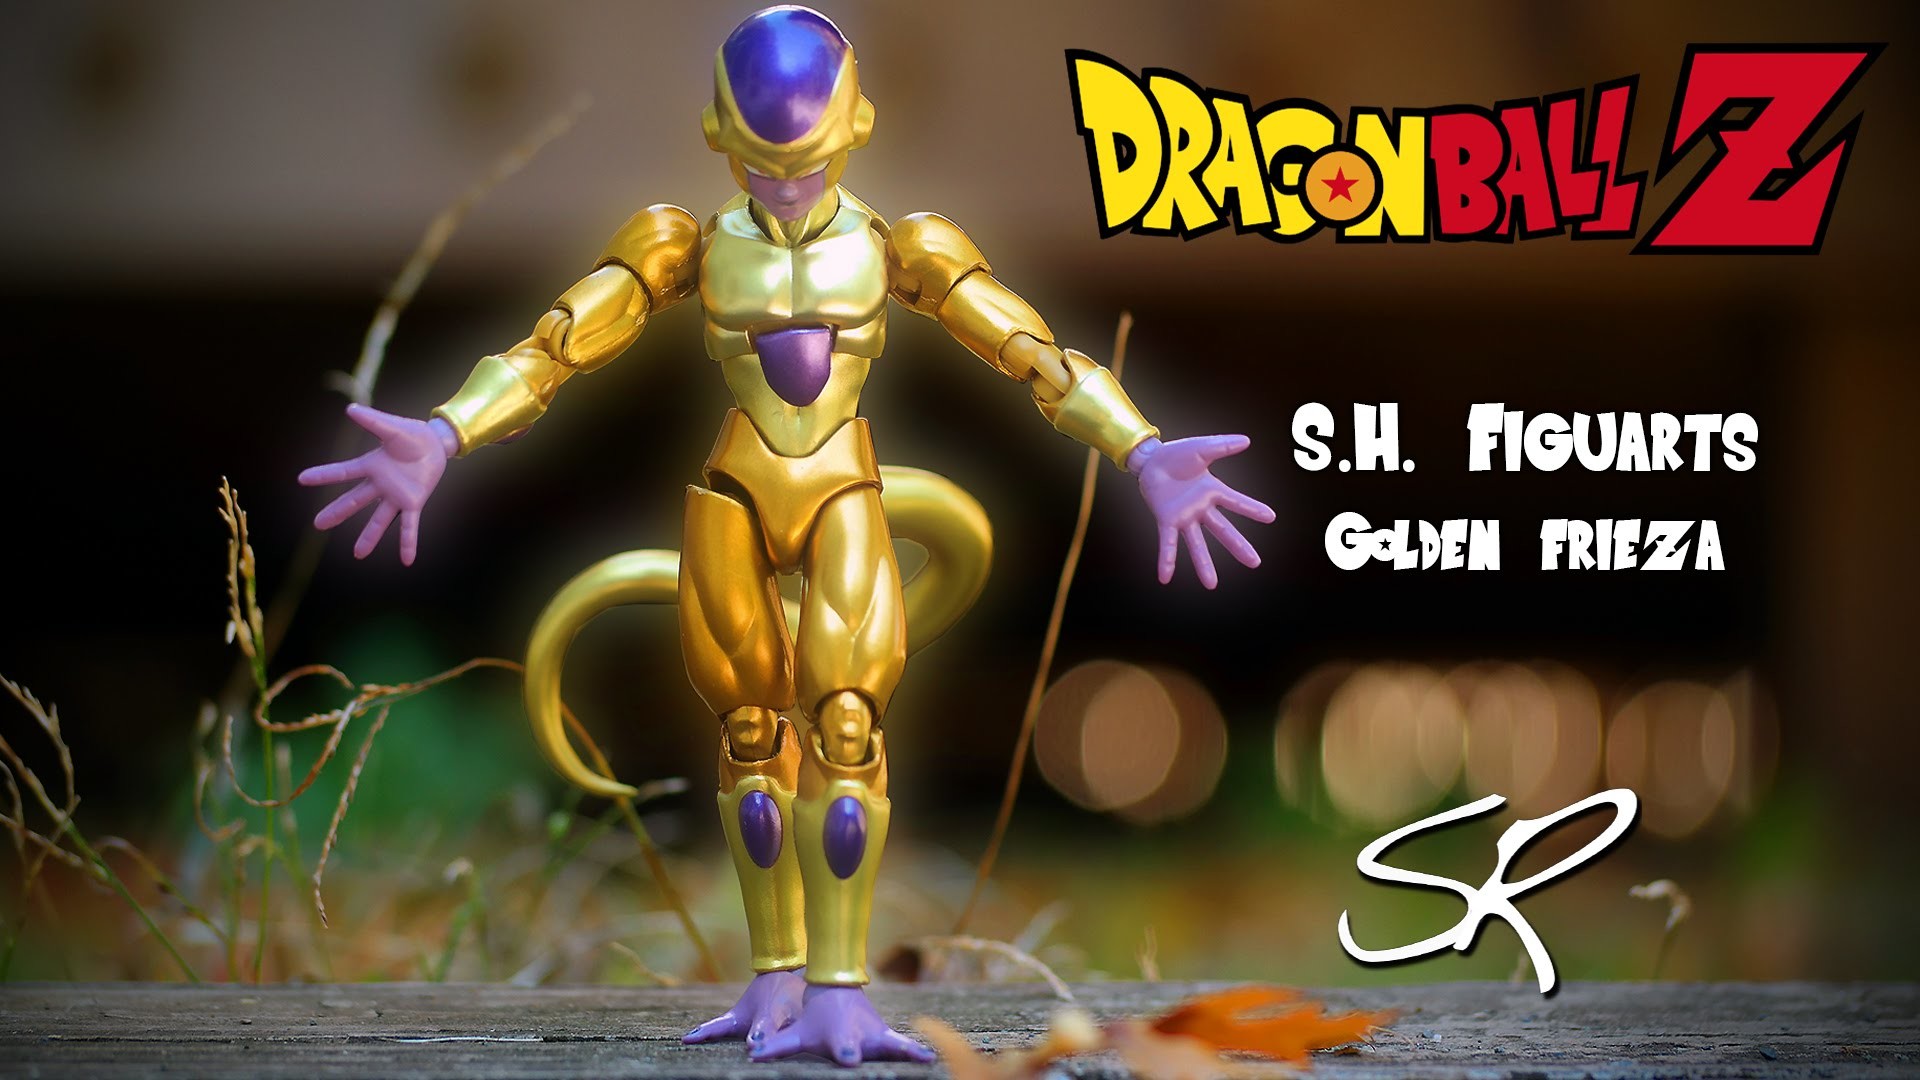 S.H. Figuarts Dragon Ball Z Golden Frieza Figure Resurrection of F – YouTube